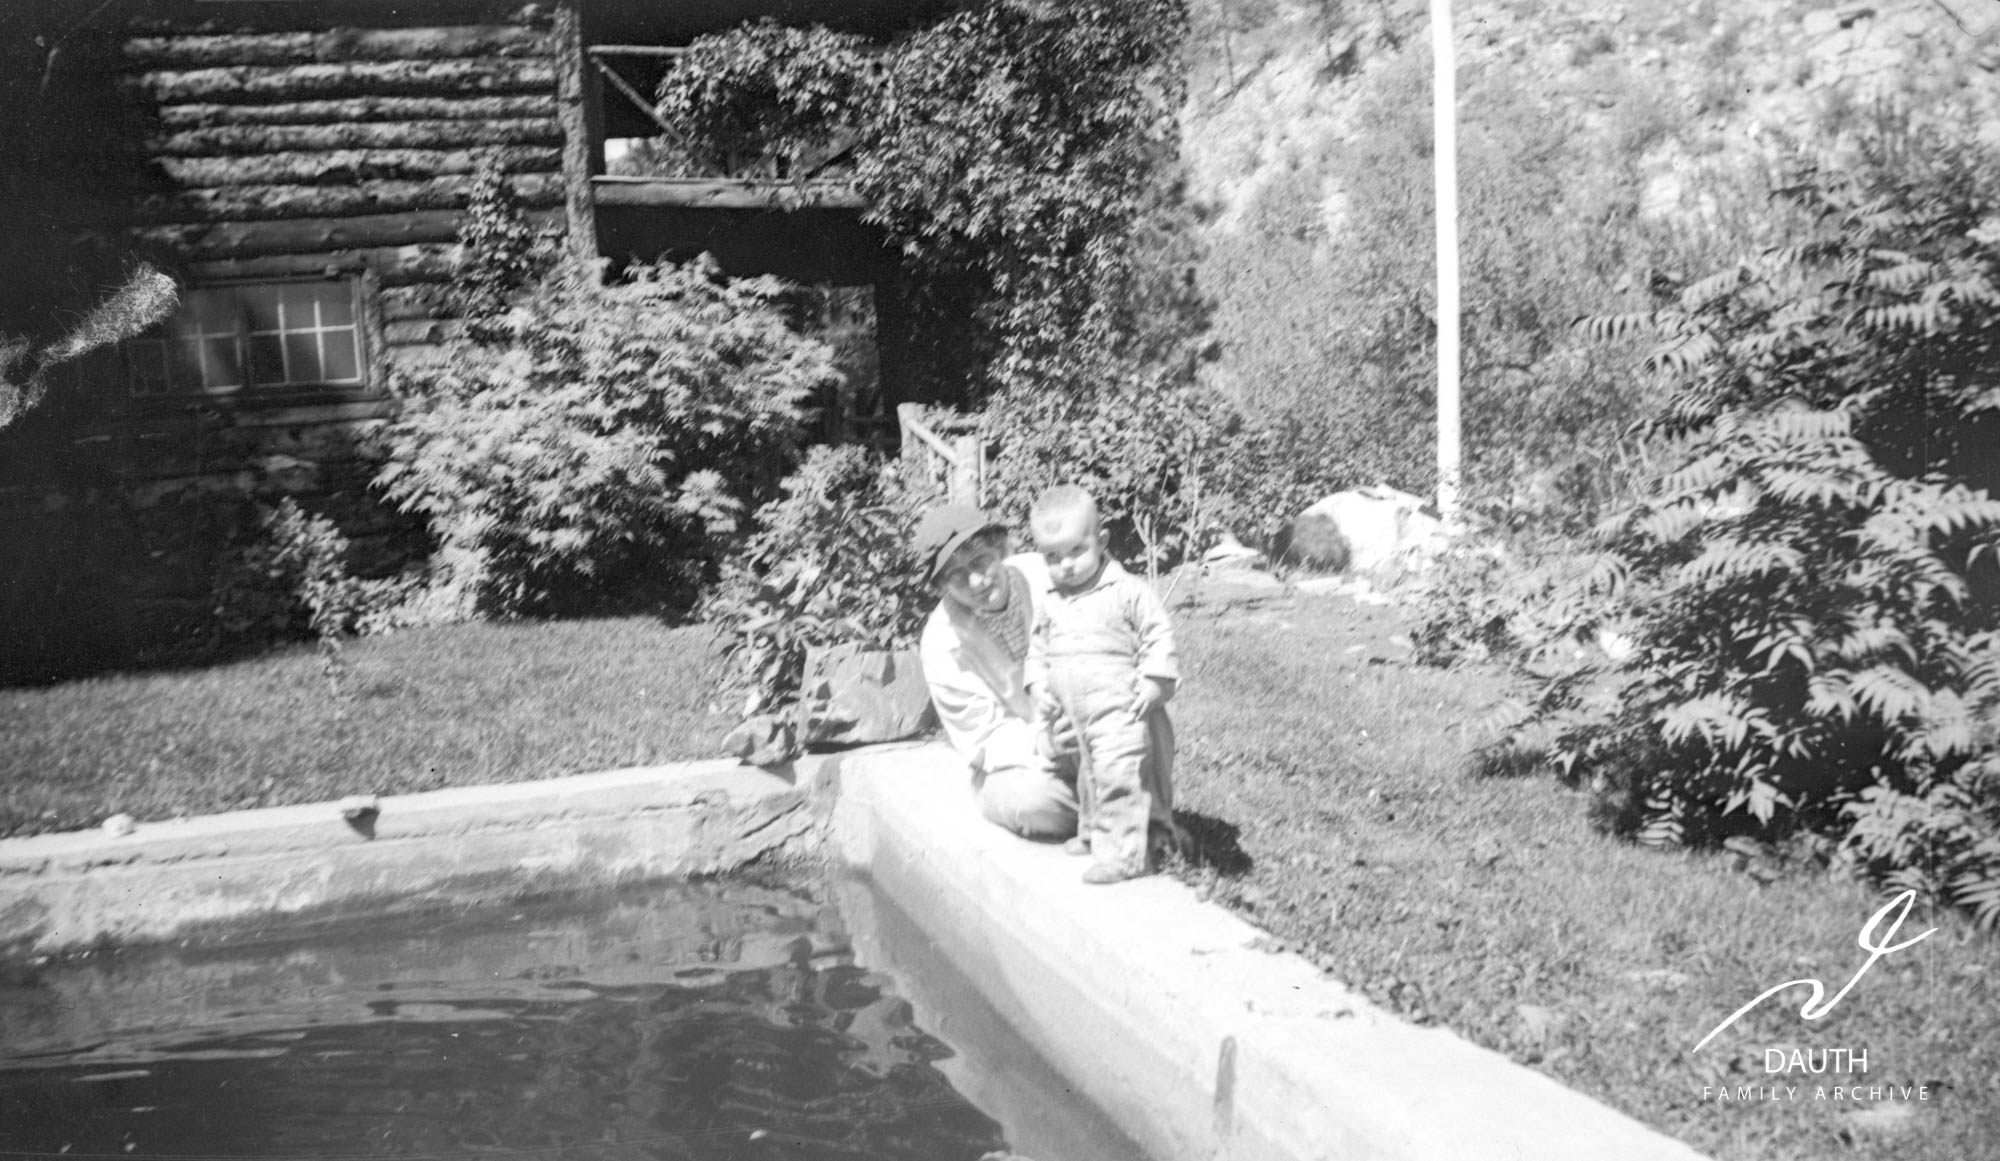 Idlewild Lodge - idlewildlodge.github.io - Circa 1930s - East Idlewild Lodge Pond